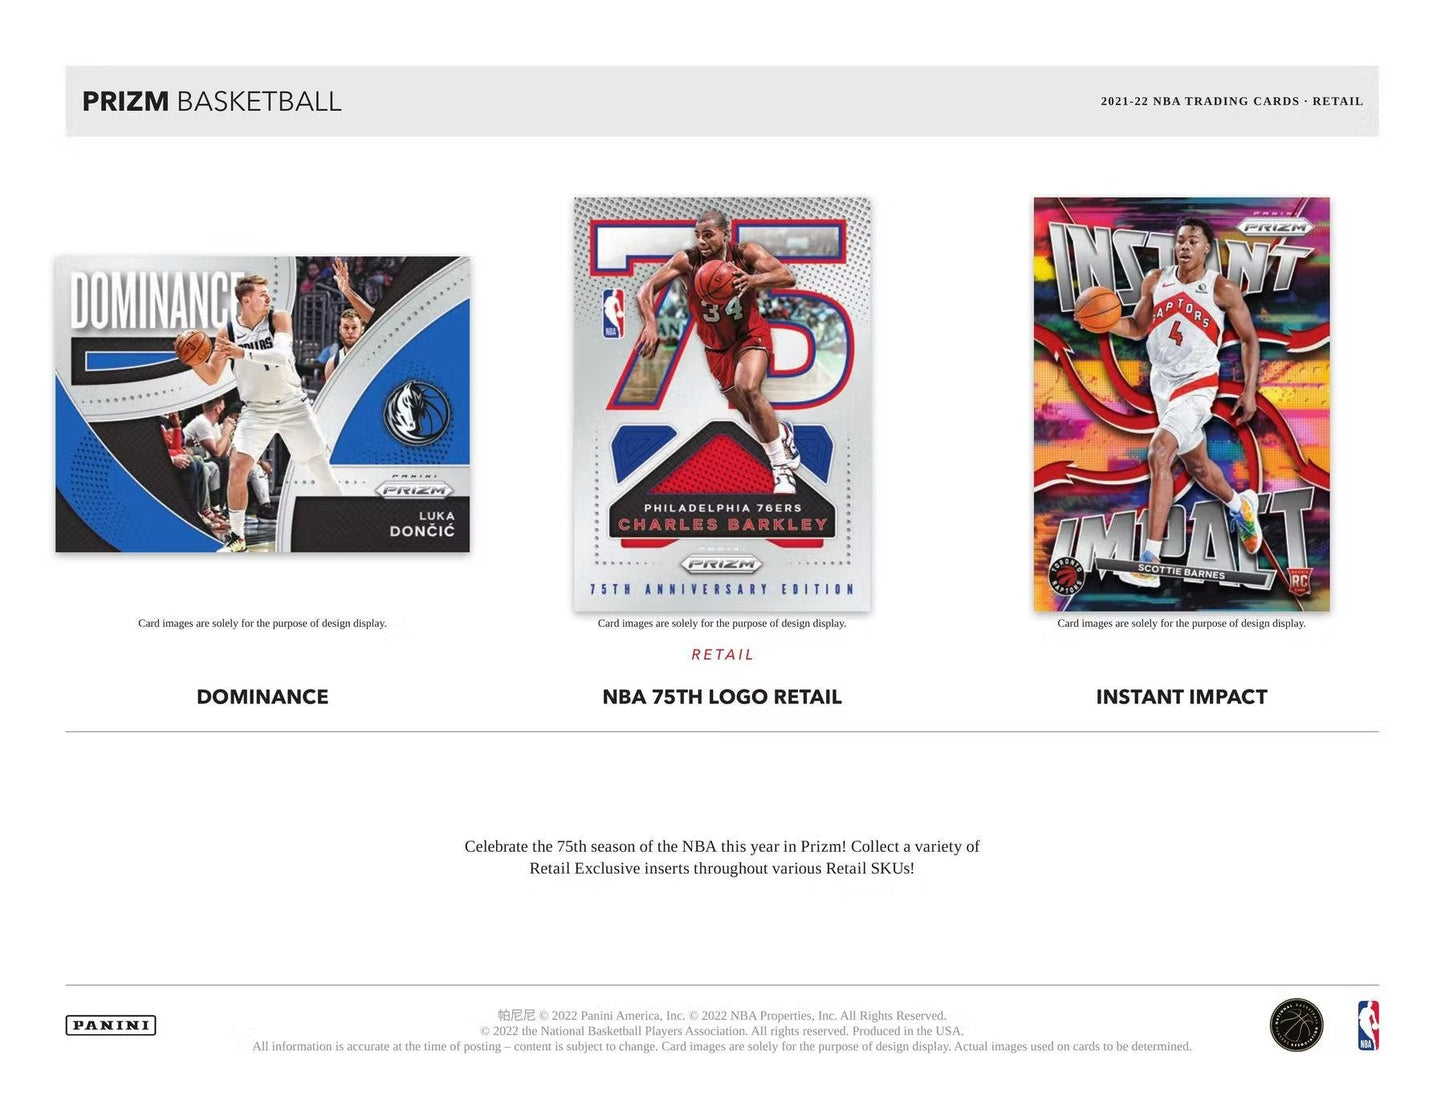 2021-22 Panini Prizm NBA Basketball Retail Pack